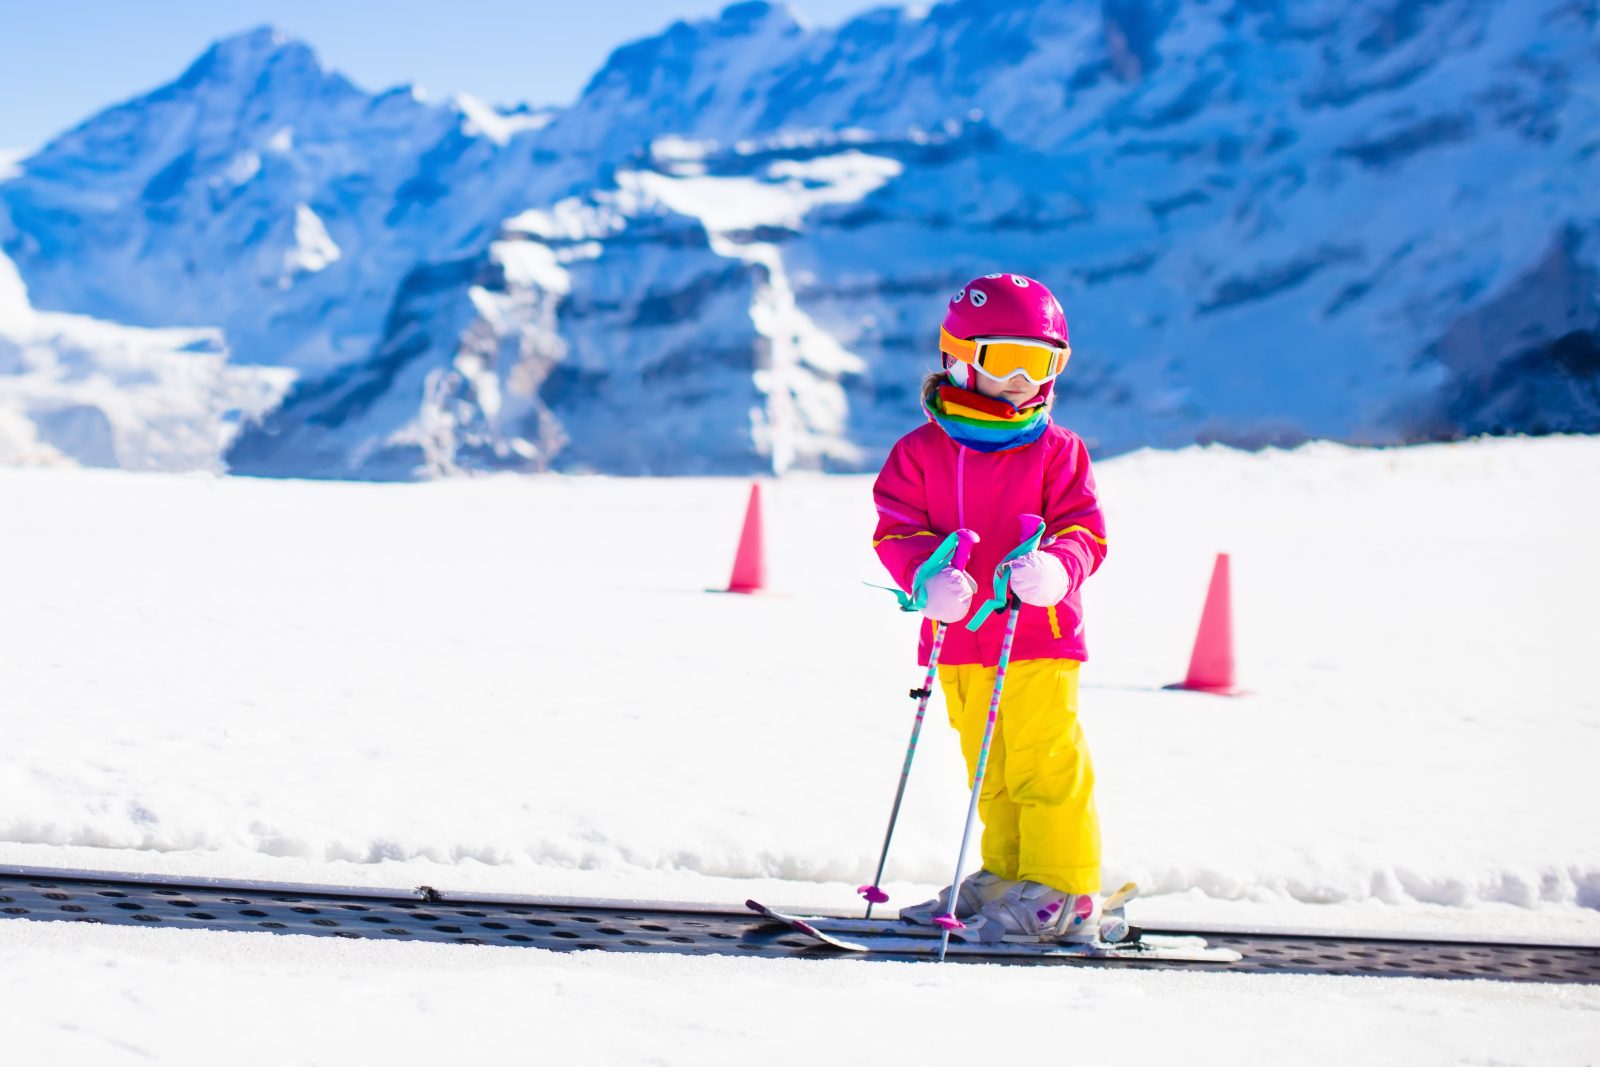 Top 5 Ski Resorts for Beginners in Europe